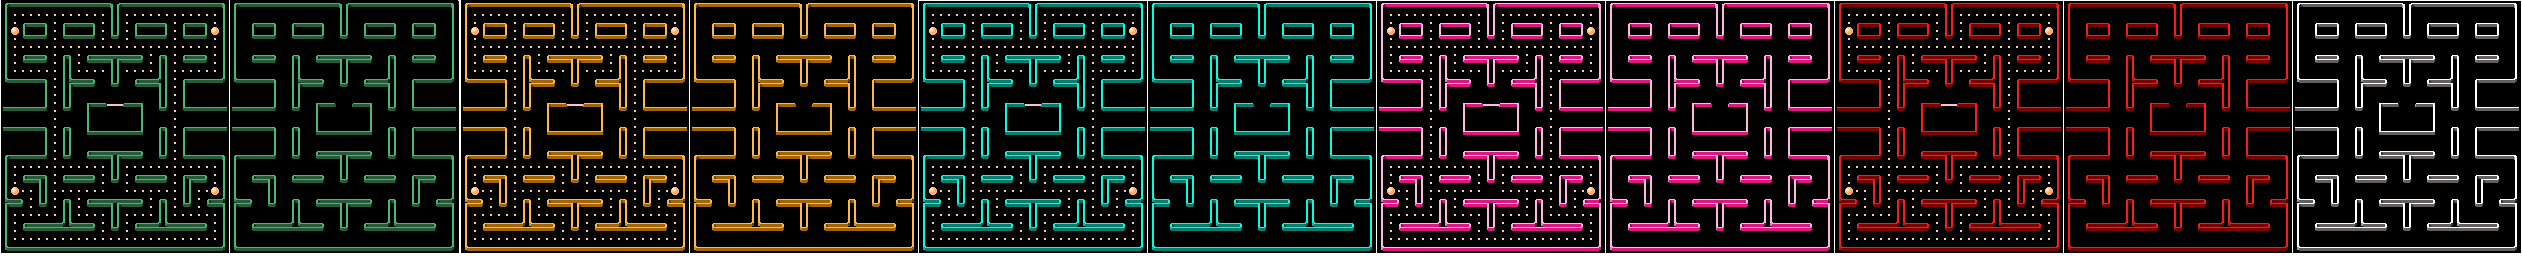 Pac-Man Plus (J2ME) - Mazes